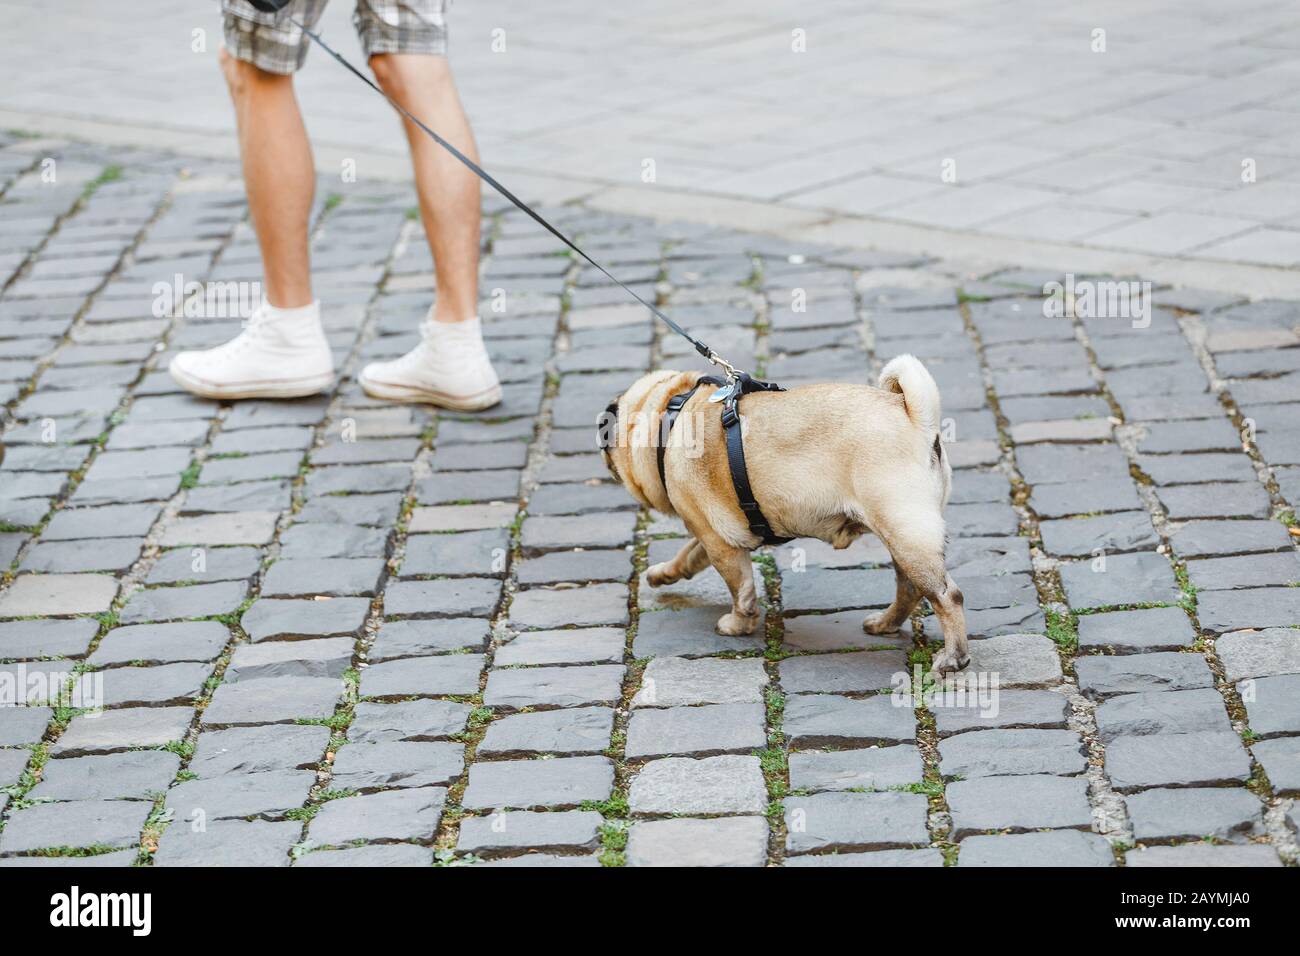 Uomo con un cane pug cammina lungo strada lastricata marciapiede Foto Stock